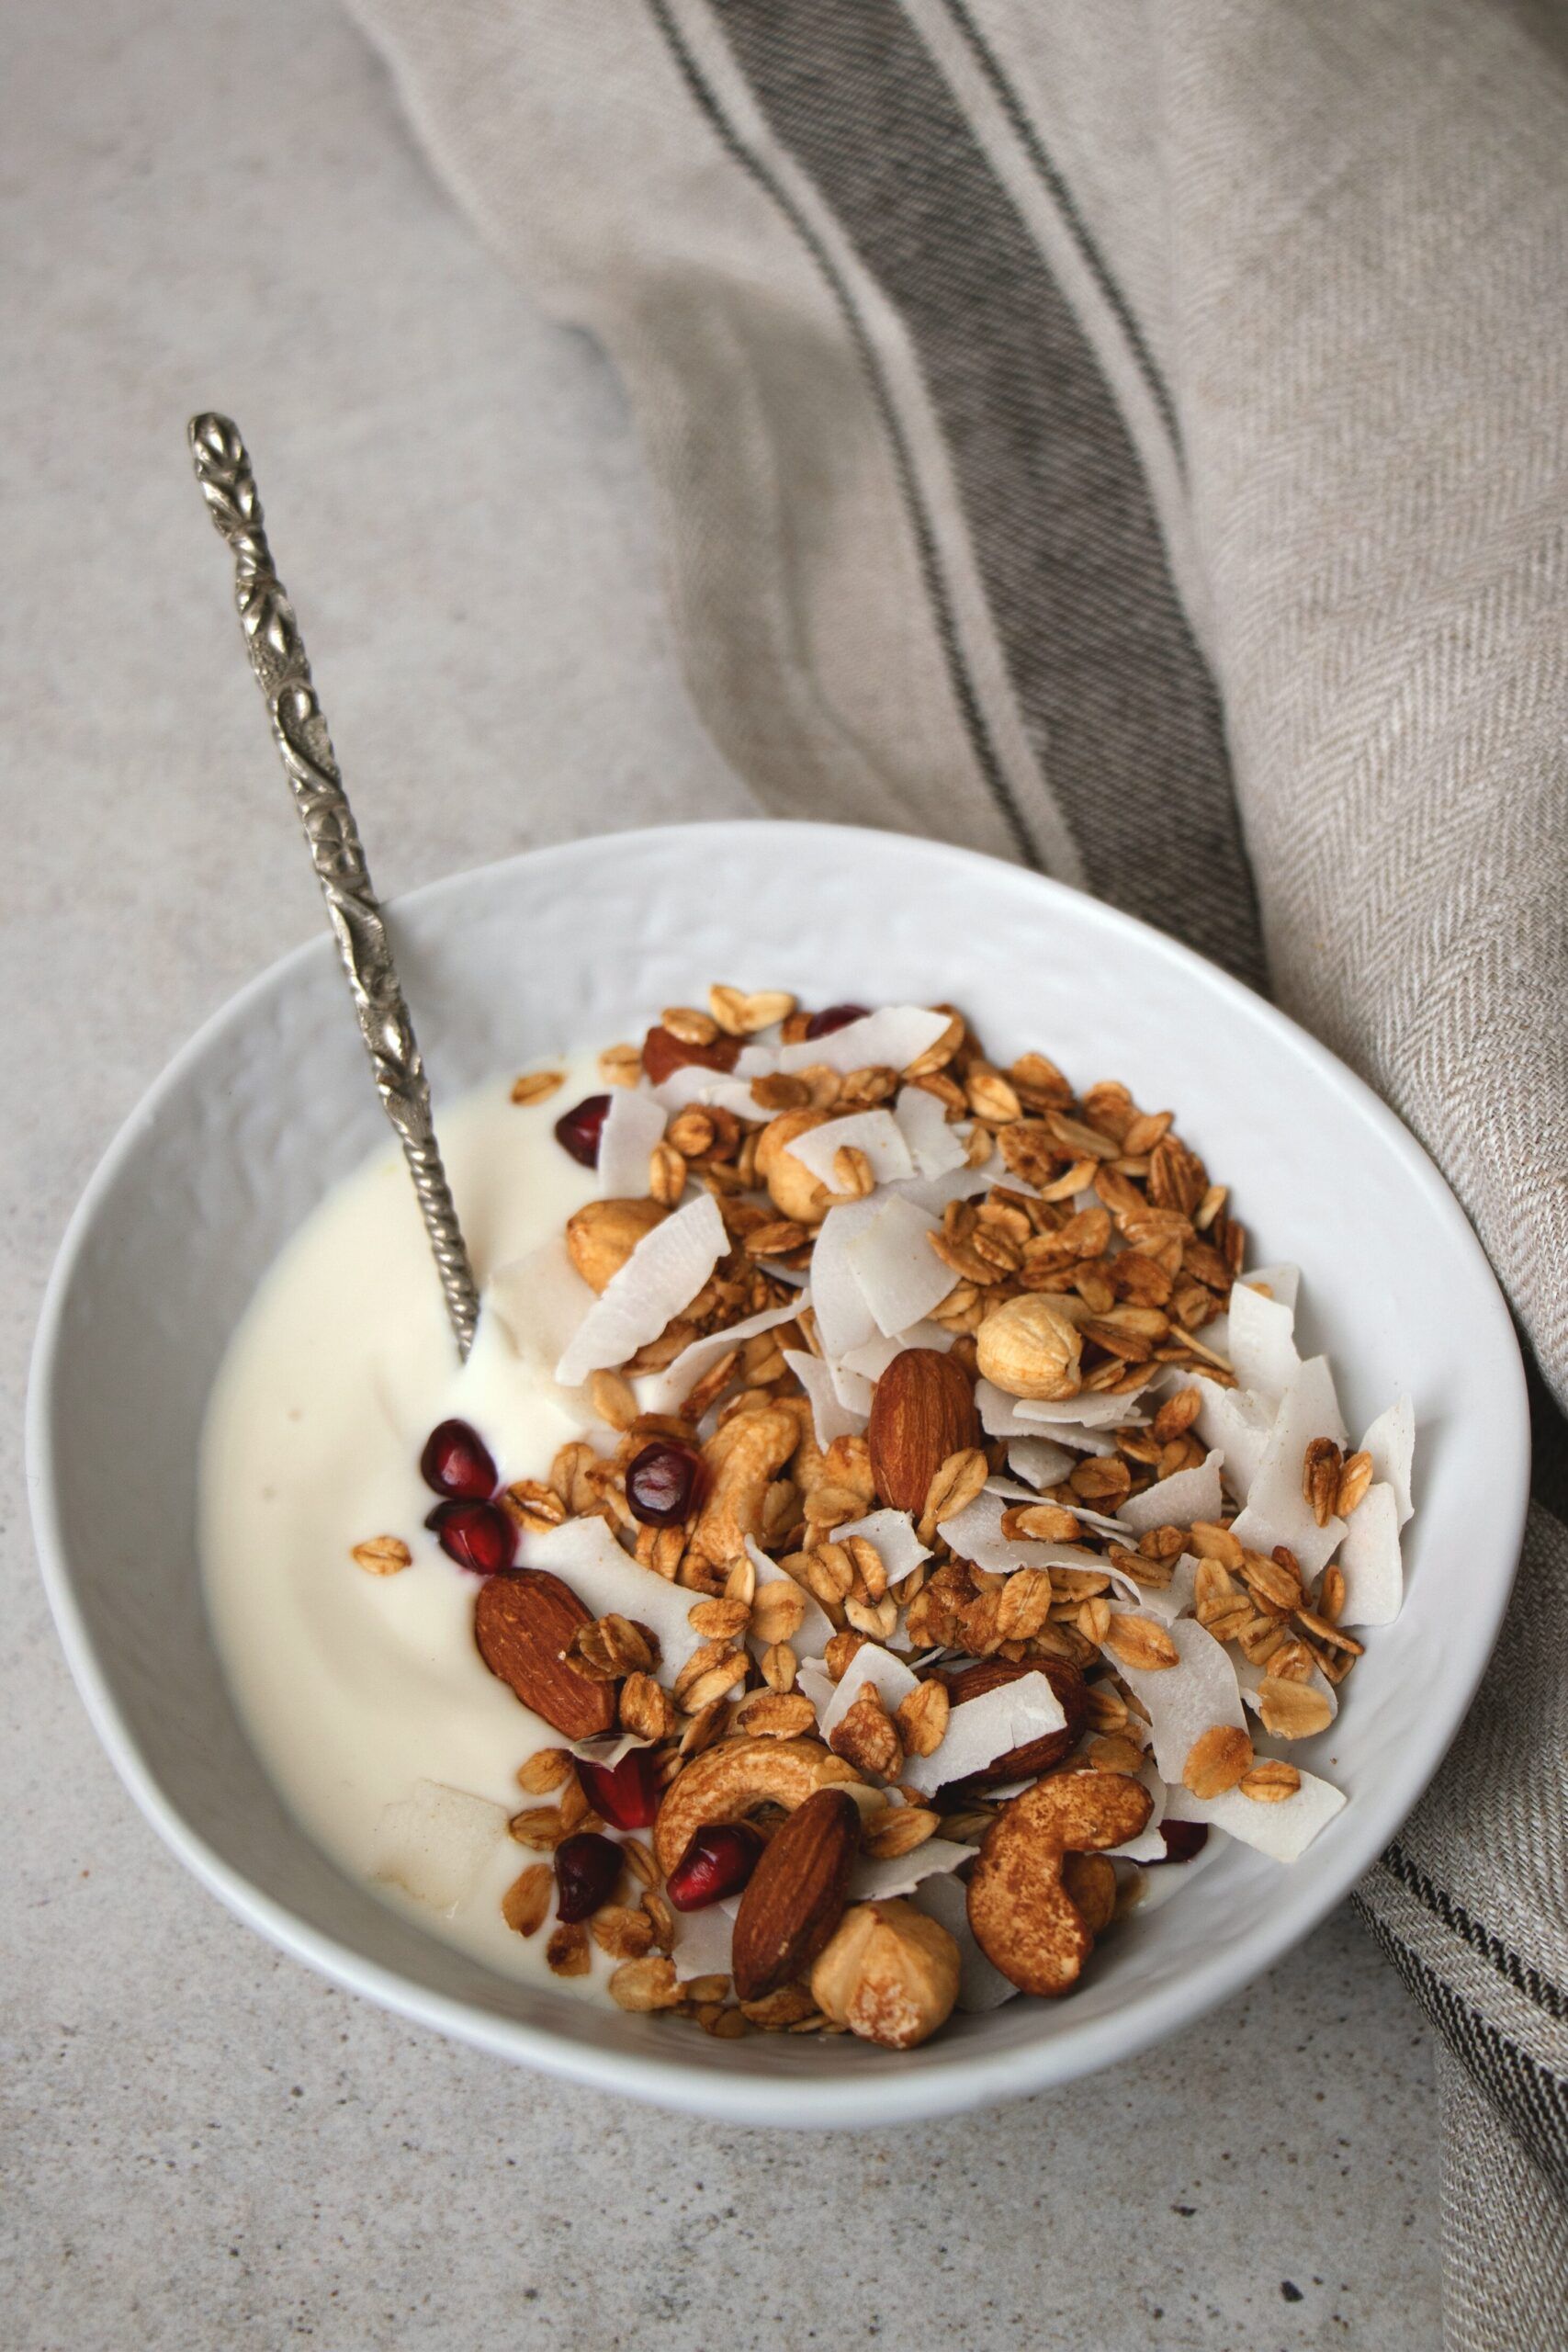 yogurt with granola on top